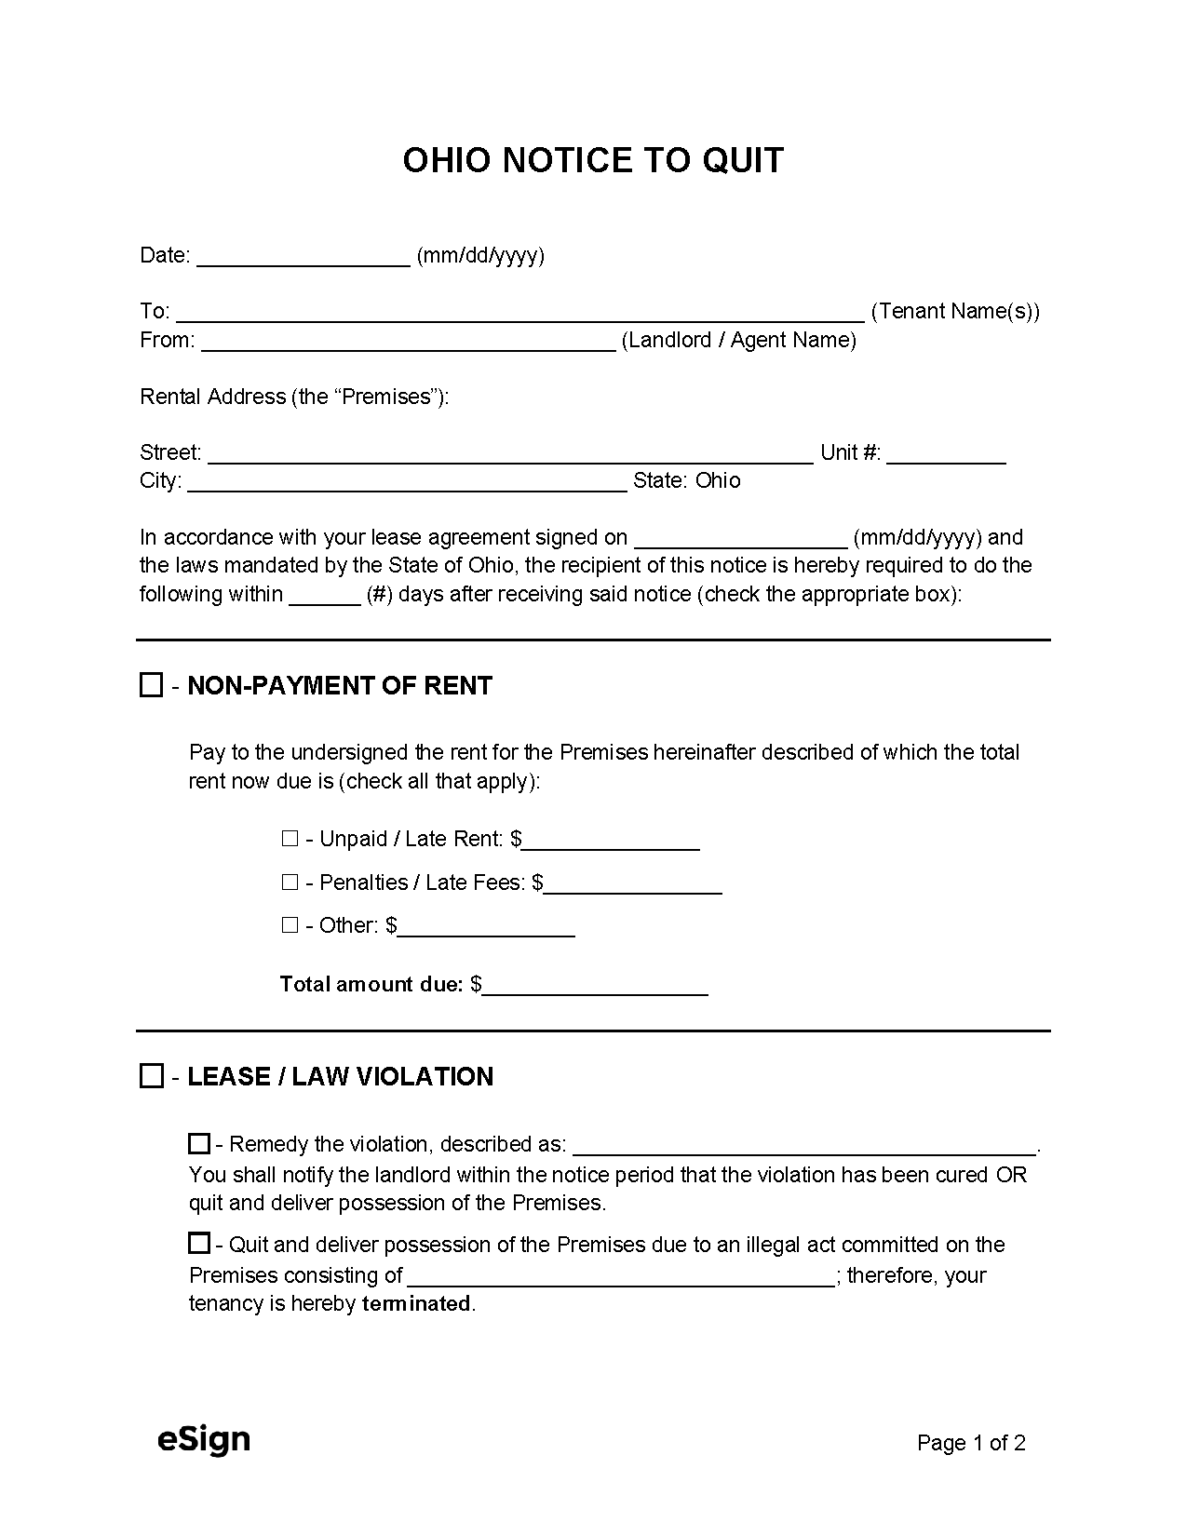 free-ohio-eviction-notice-templates-3-pdf-word